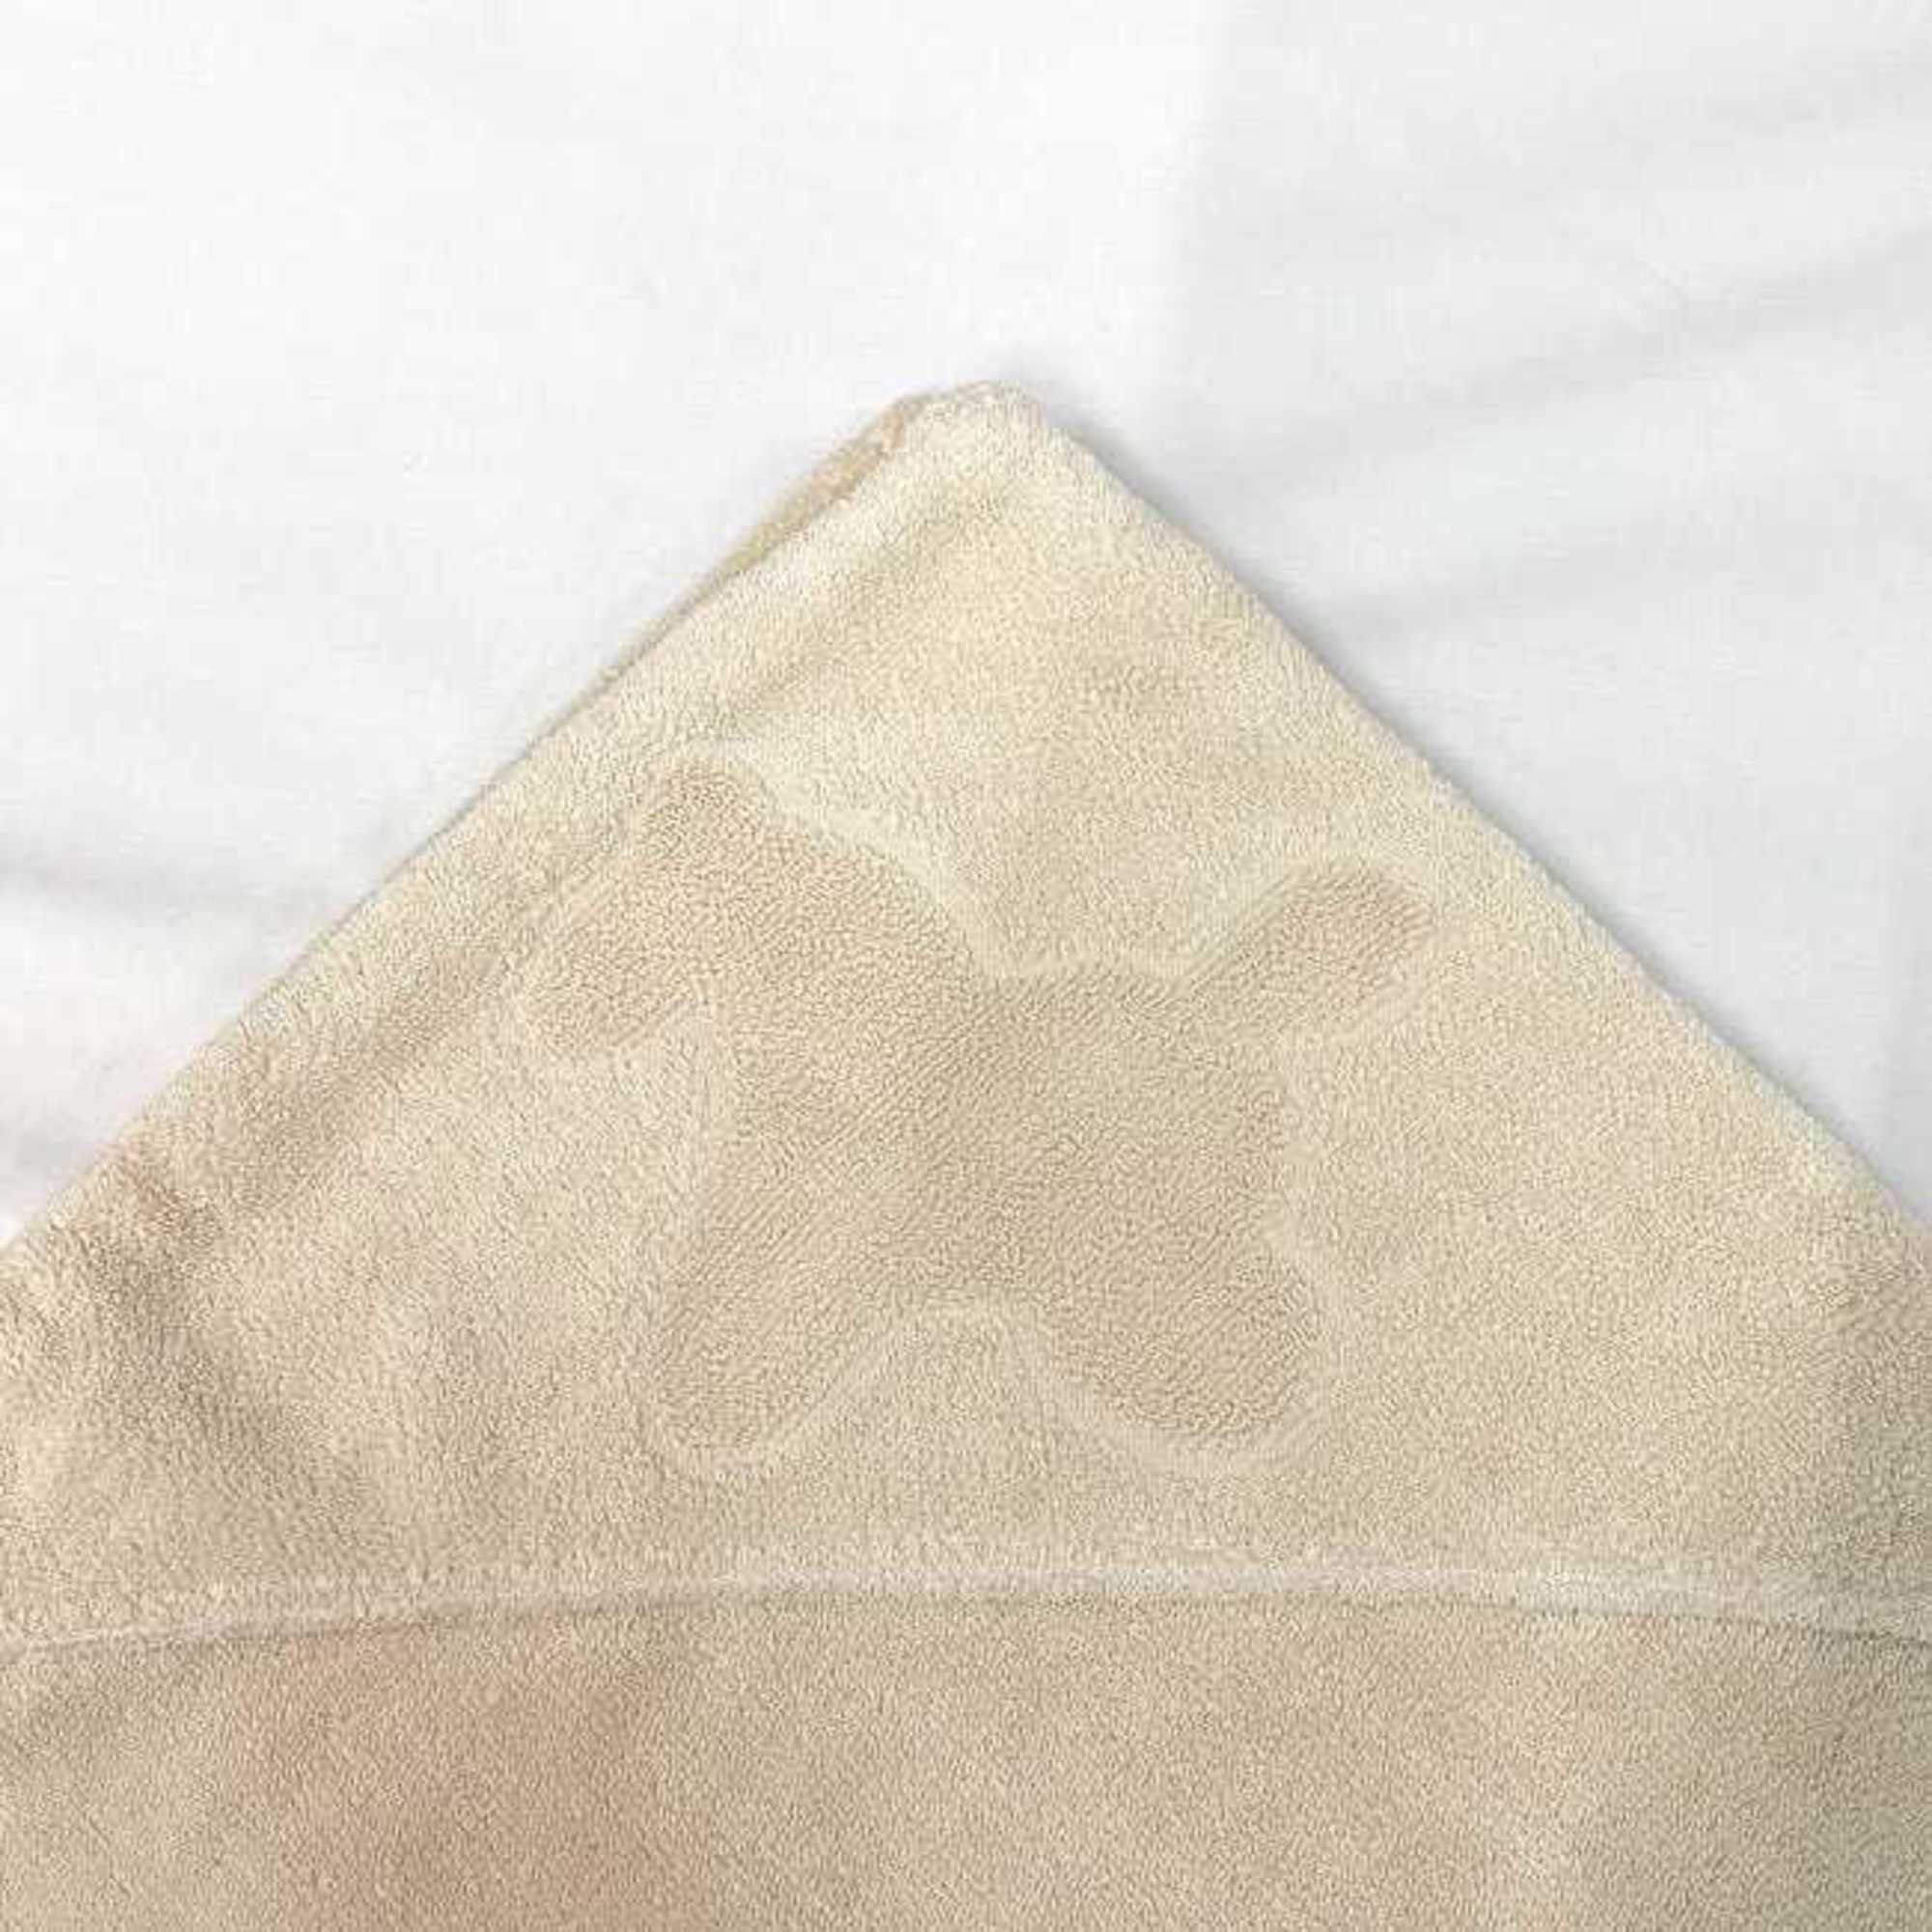 Hermes towel set beige pink Adada ec-20208 baby products 60% cotton 40% modal HERMES horse bath